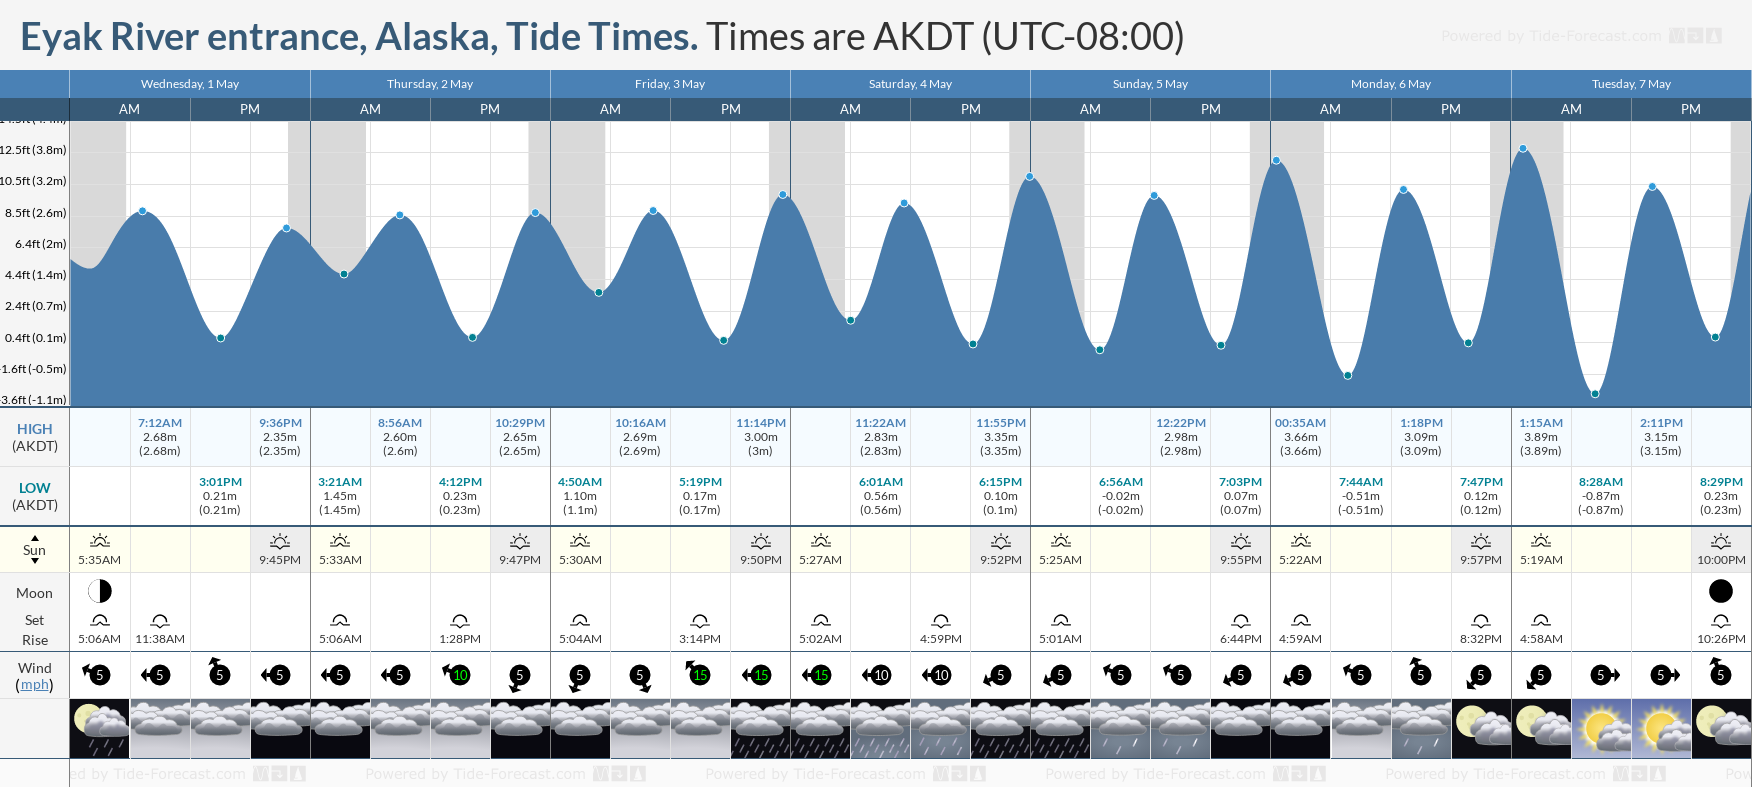 Eyak River entrance, Alaska Tide Chart including high and low tide tide times for the next 7 days